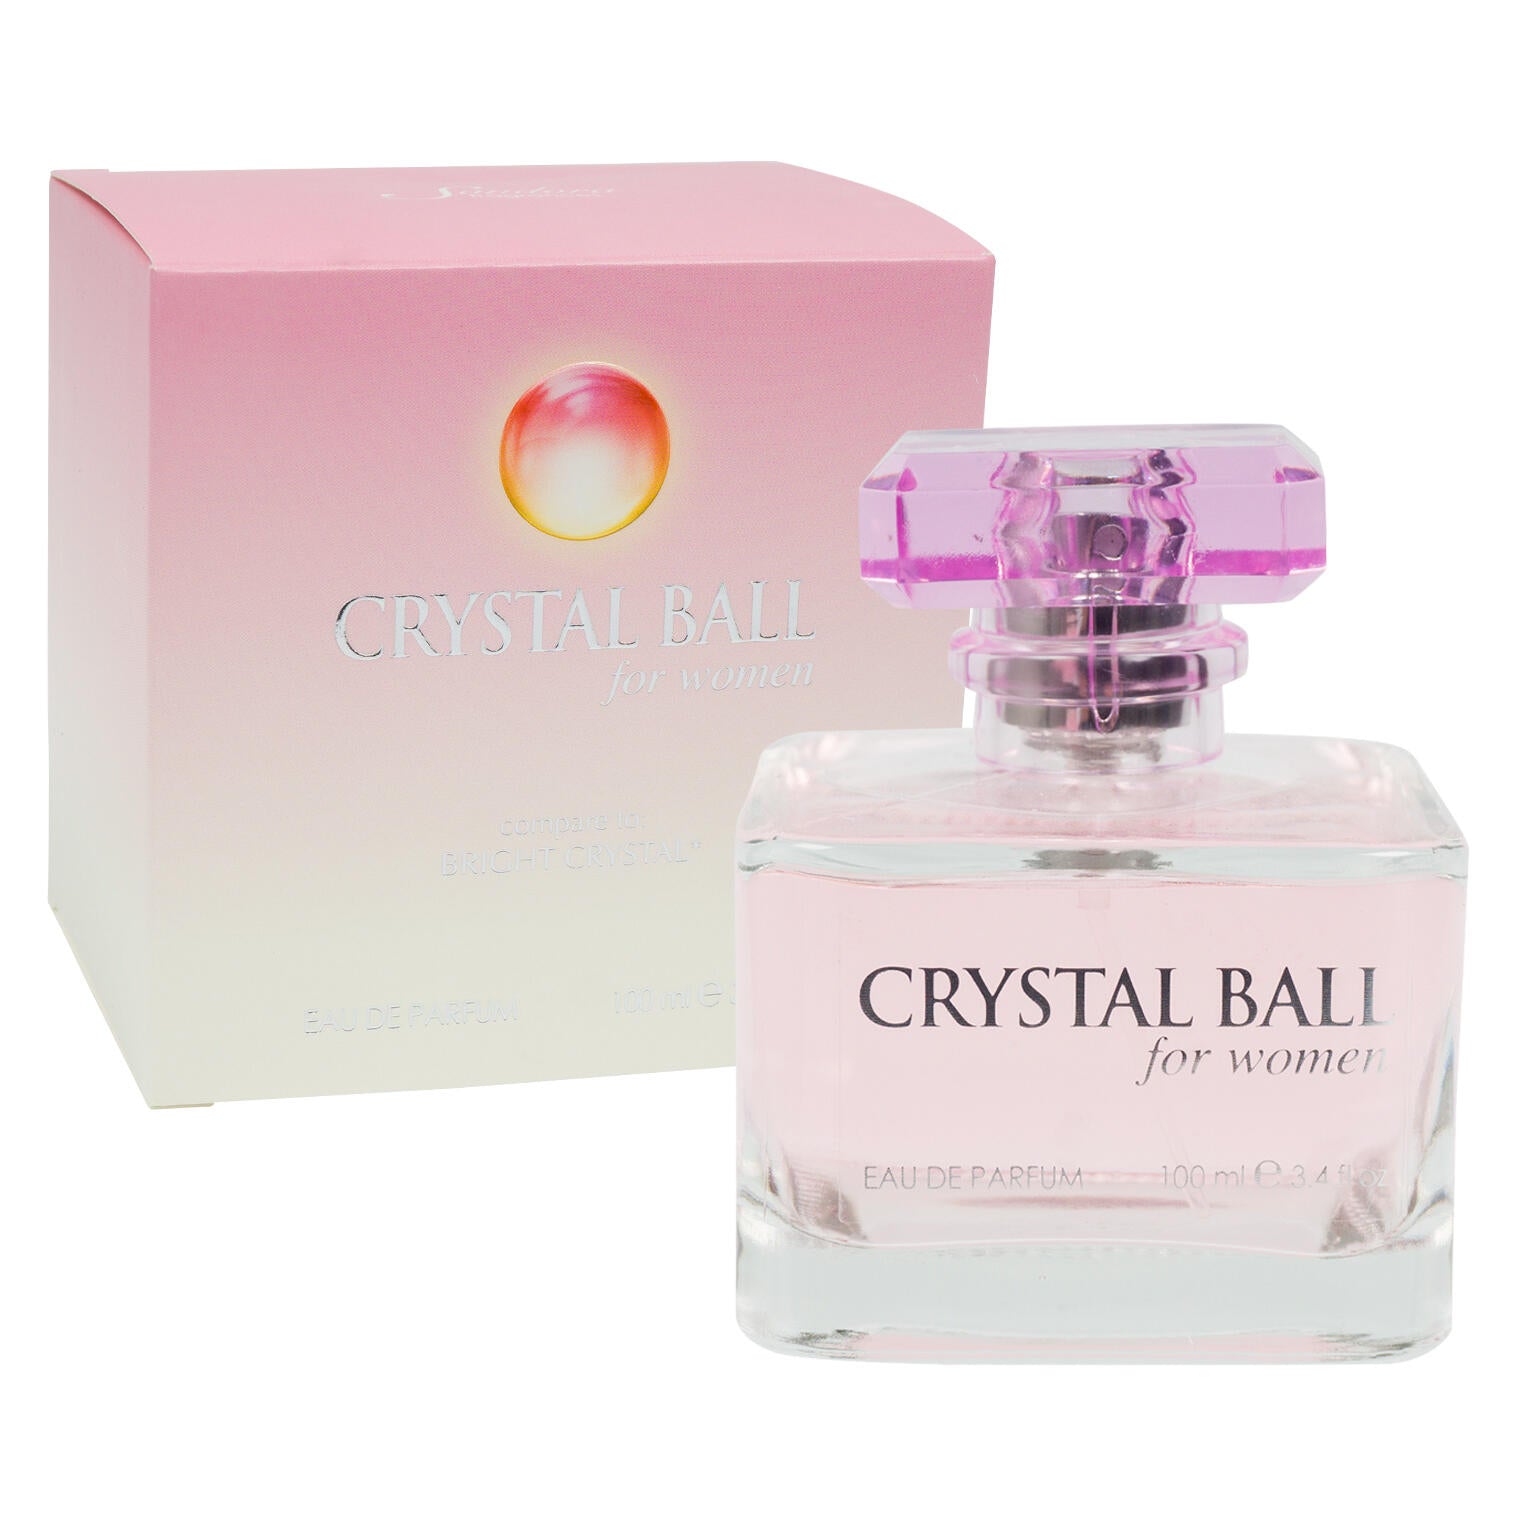 Cristalle - Perfume & Fragrance